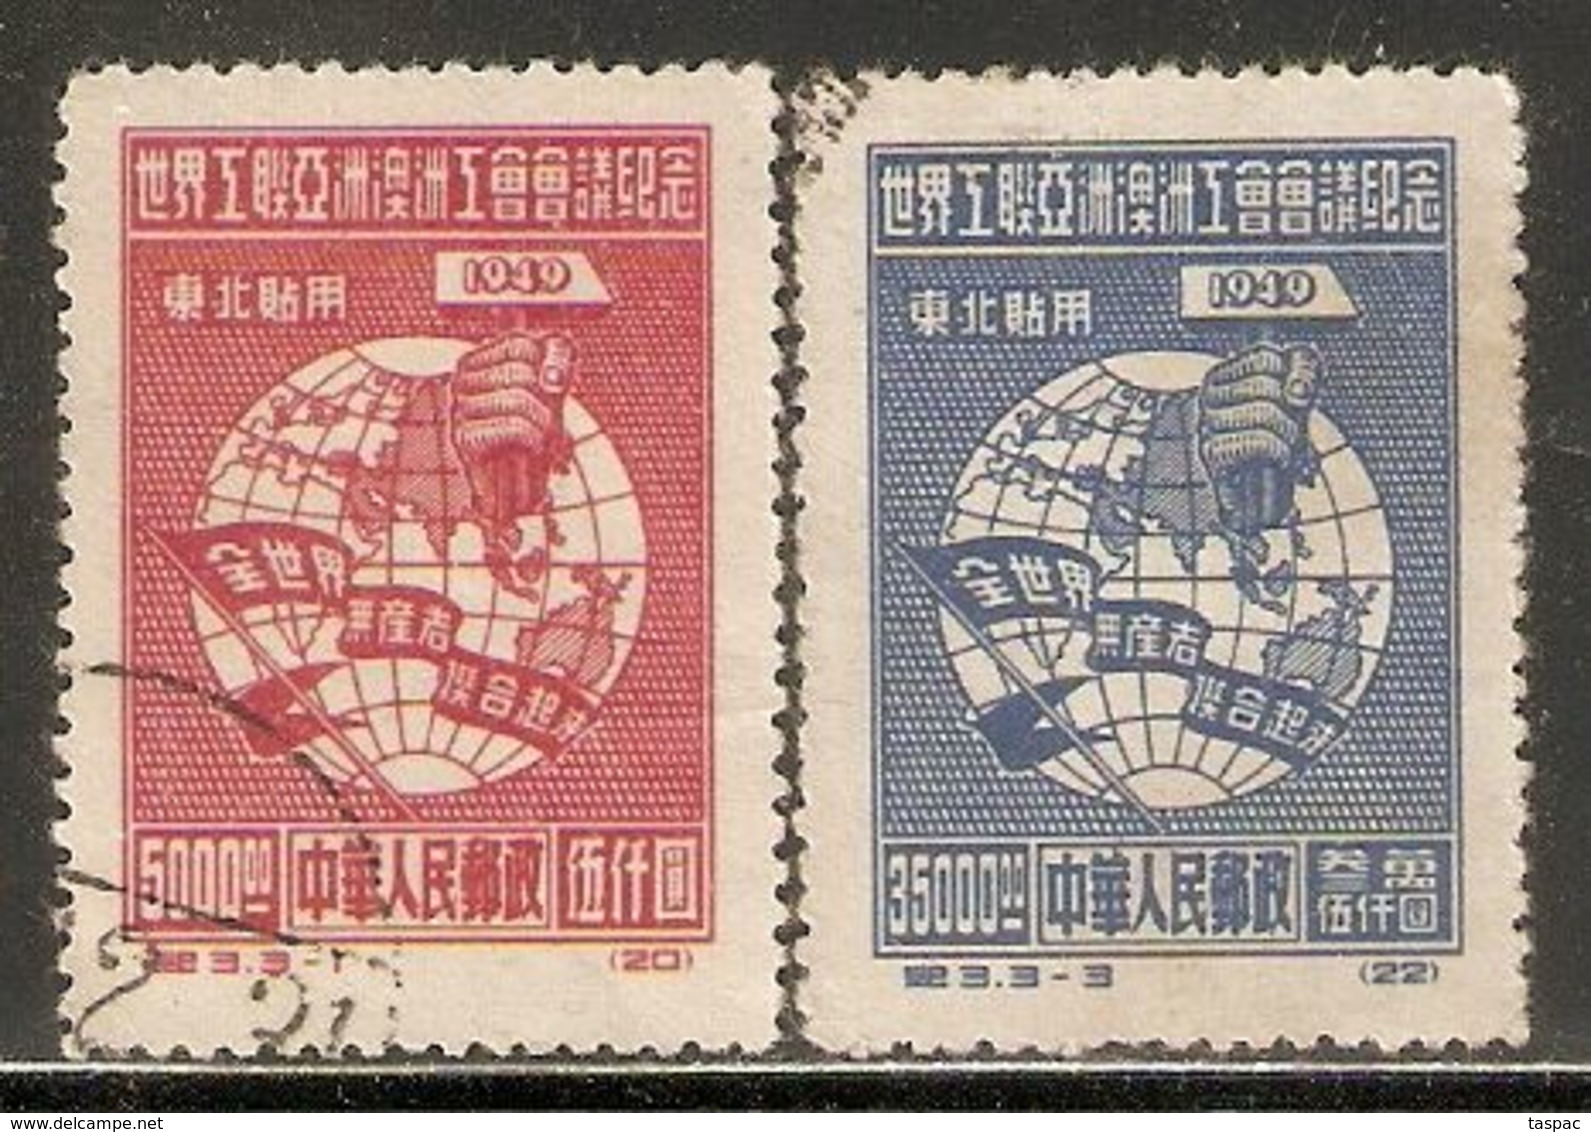 Northeast China 1949 Mi# 155, 157 II Used - Short Set - Reprints - Globe And Hammer - Chine Du Nord 1949-50